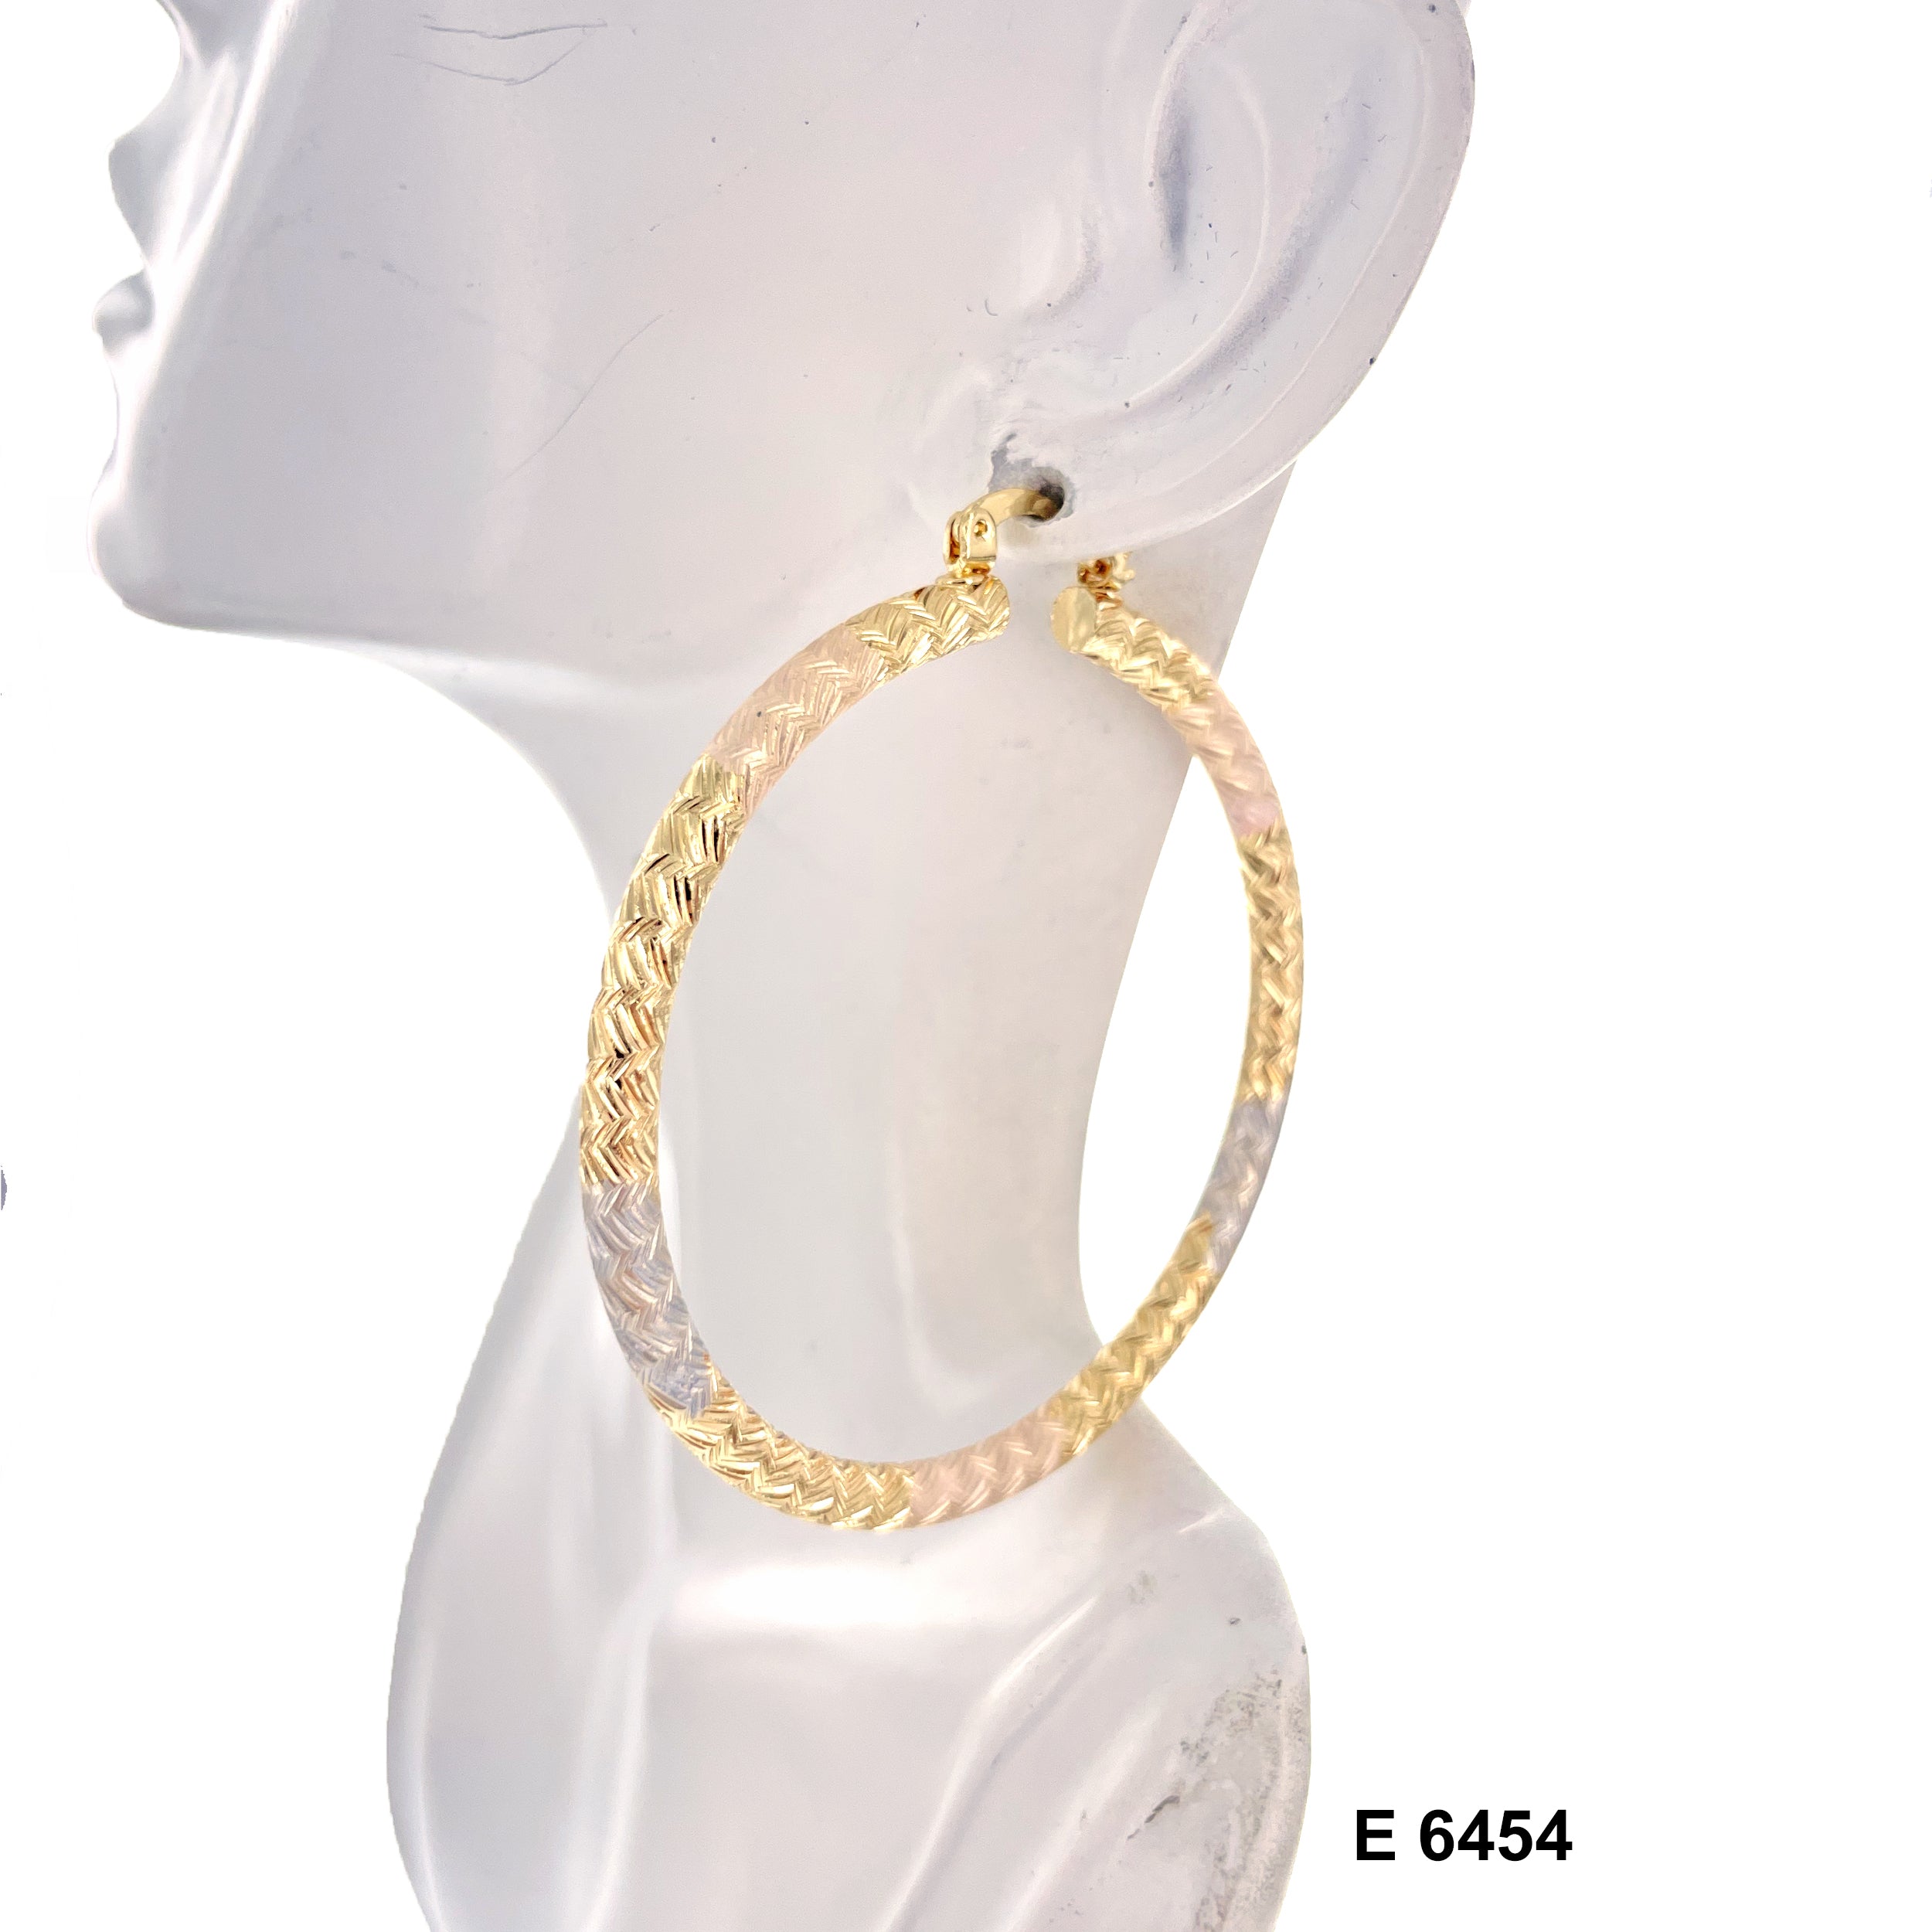 Engraved Hoop Earrings E 6454